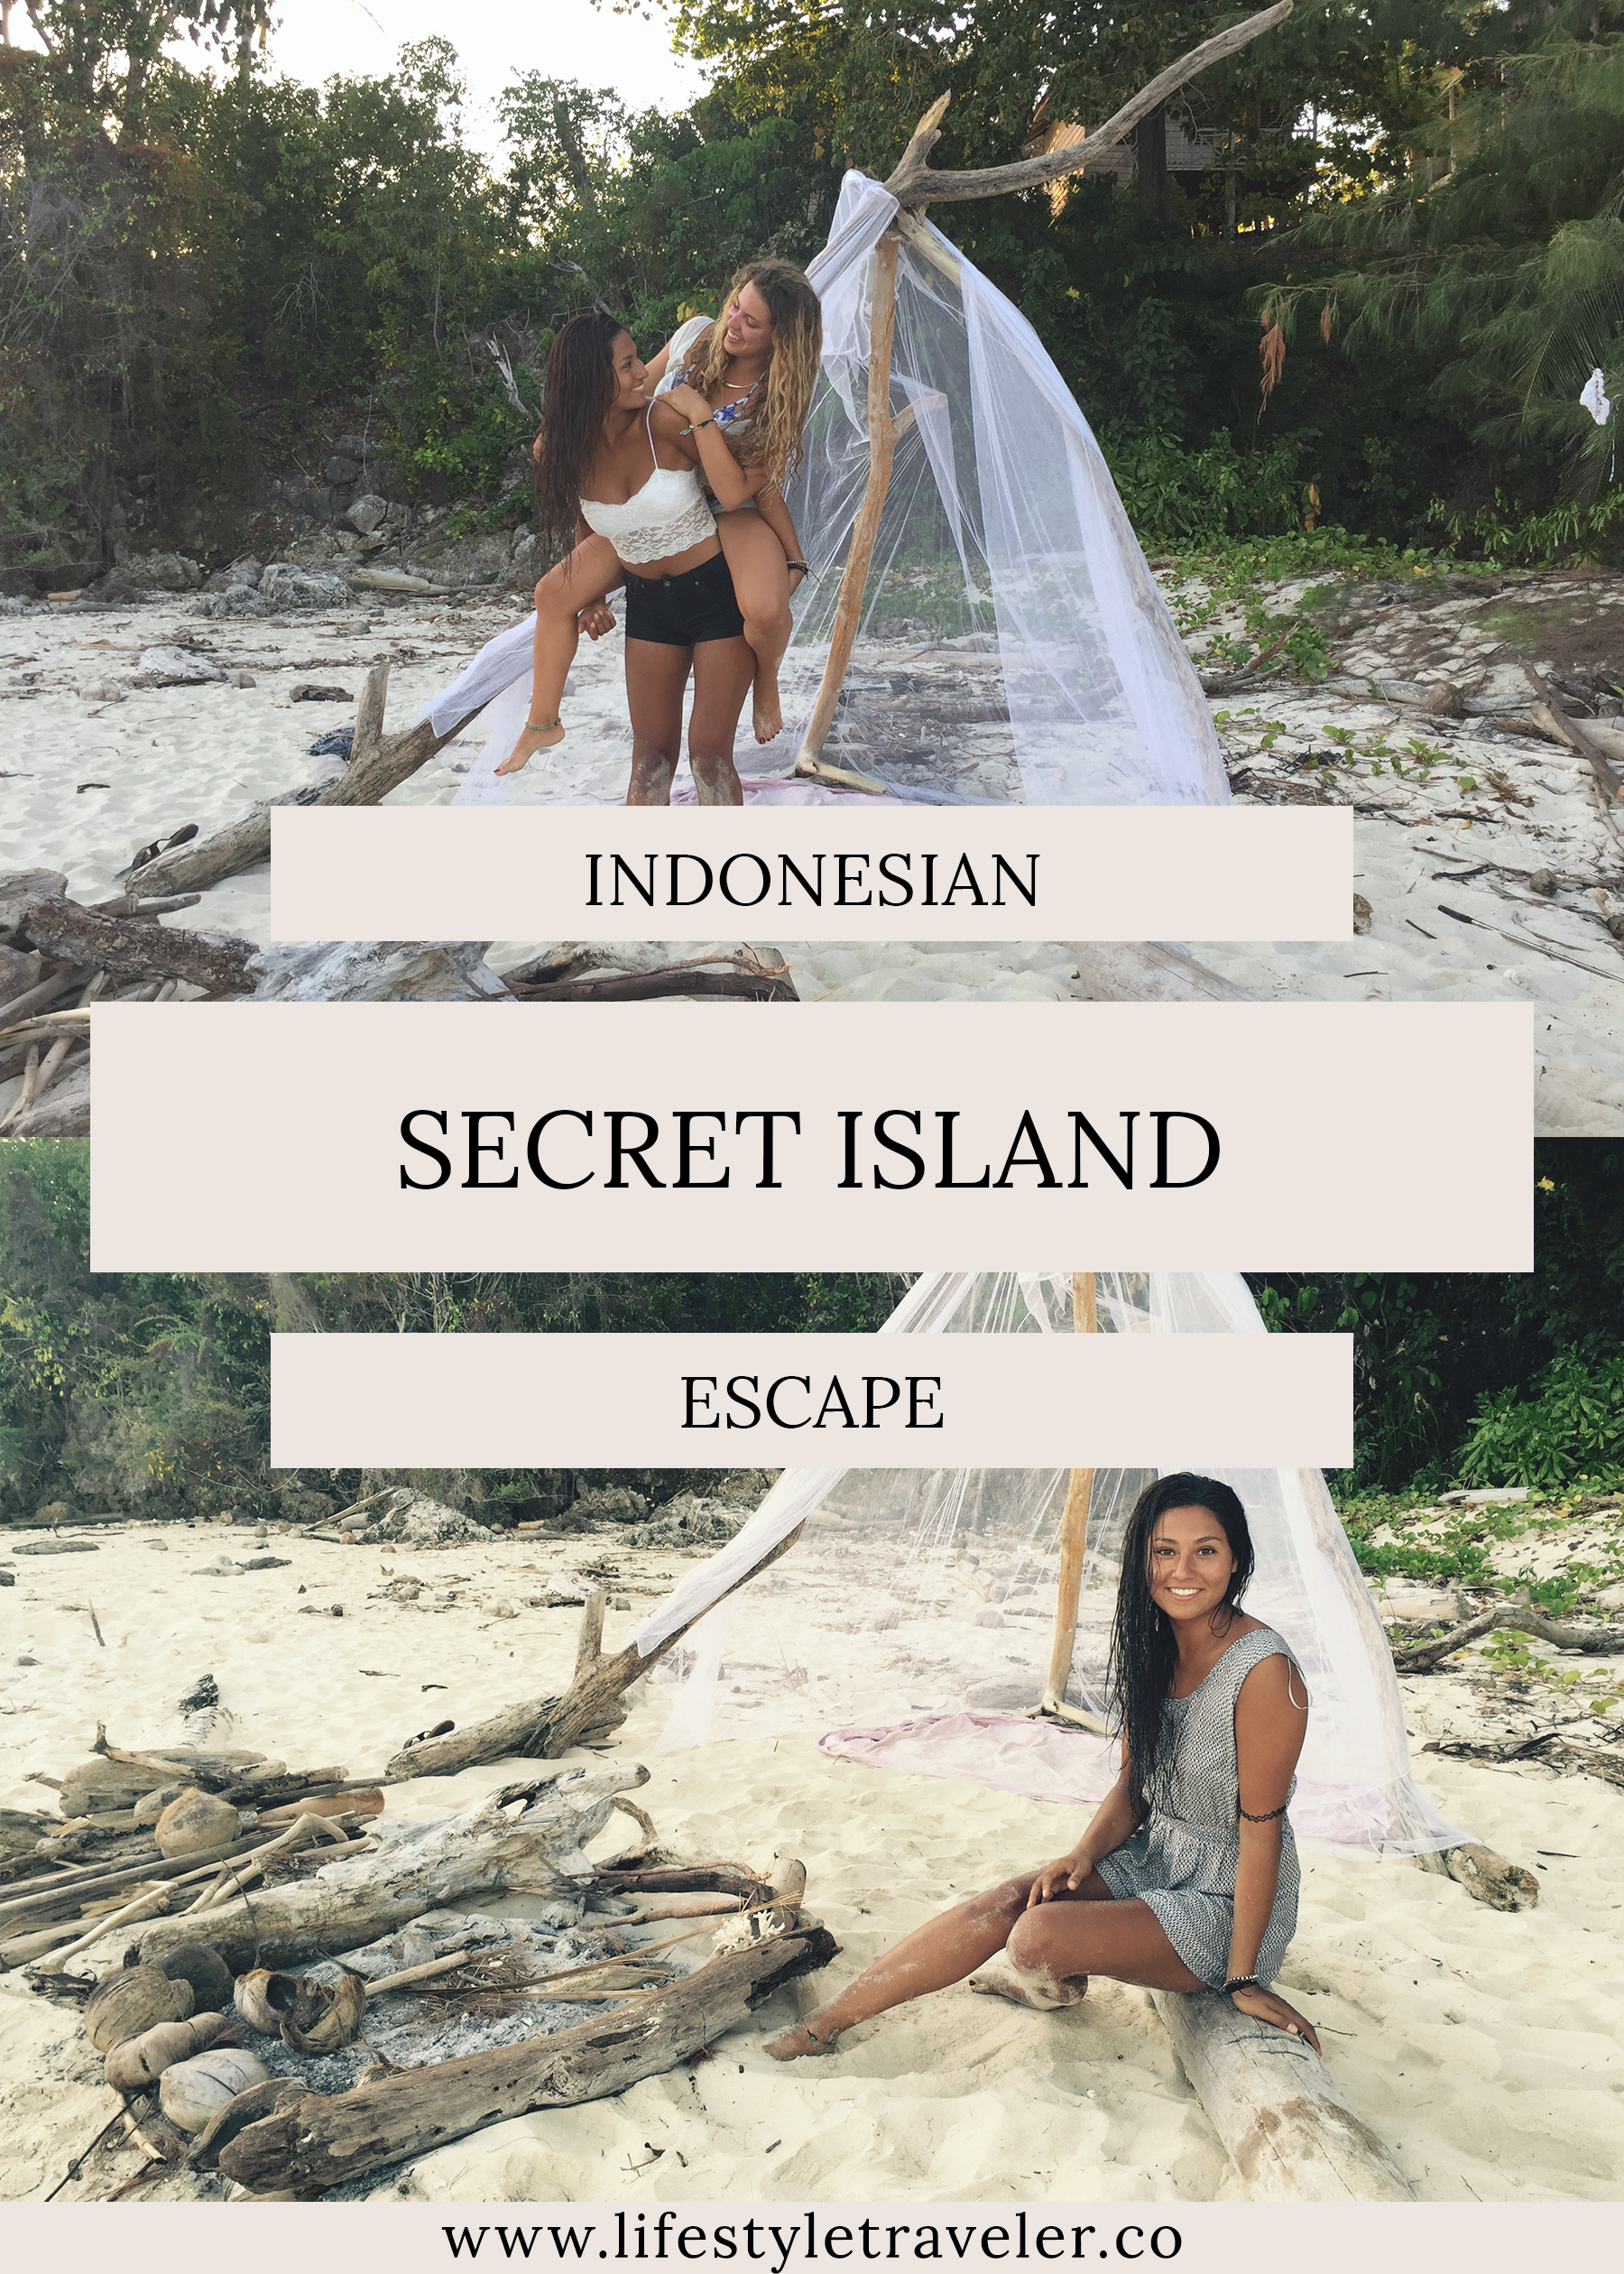 Indonesian Secret Island Escape | lifestyletraveler.co | IG: @lifestyletraveler.co | Photo by: Lis Kanzler